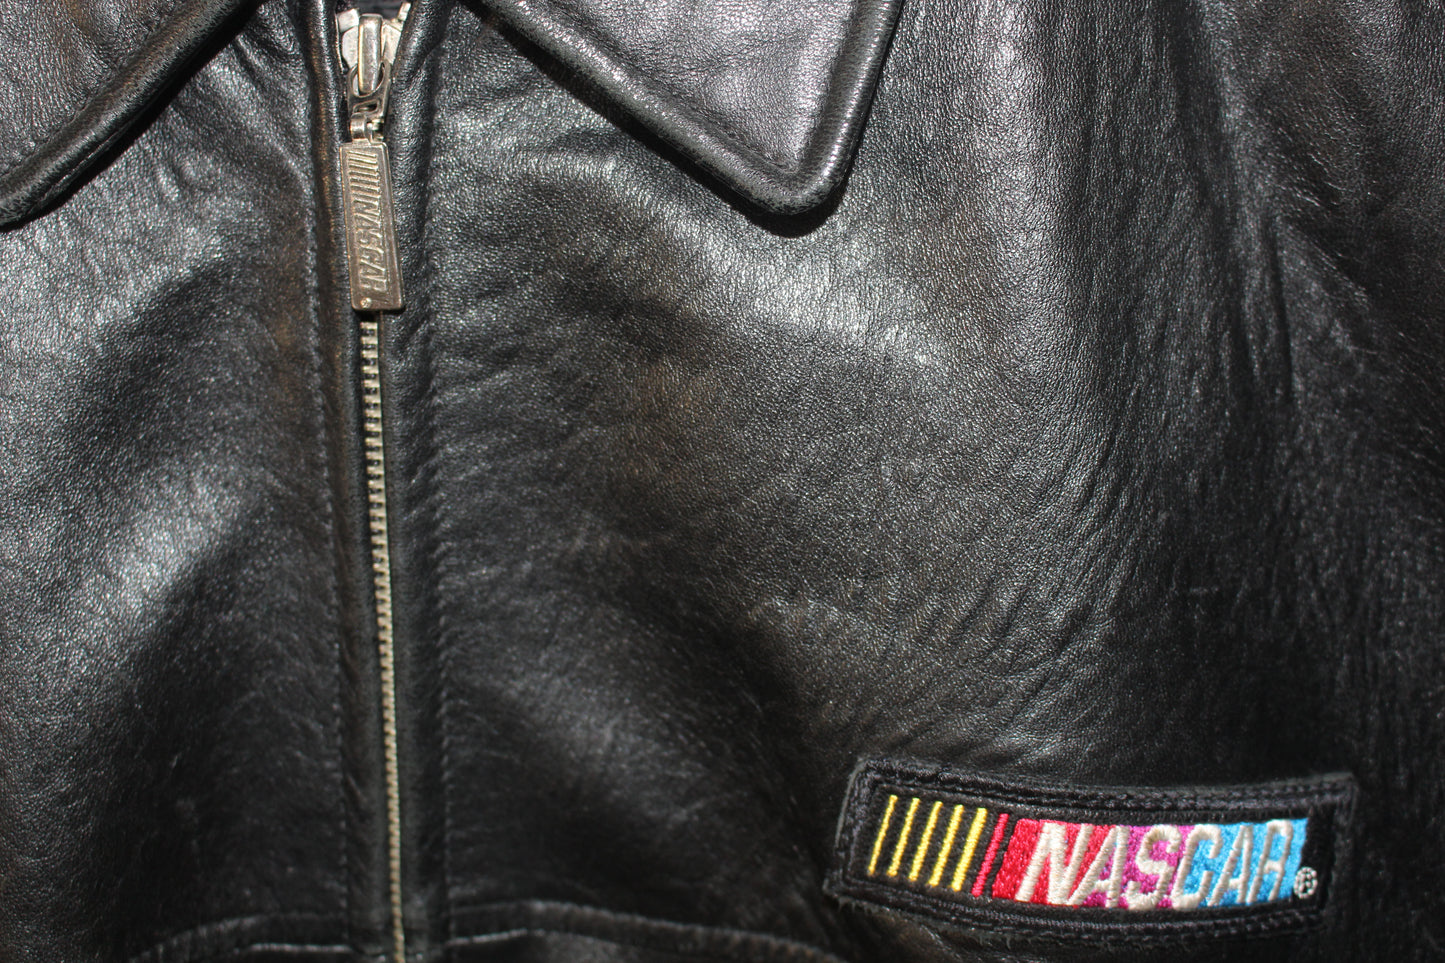 2000 NASCAR Leather Jacket (L)